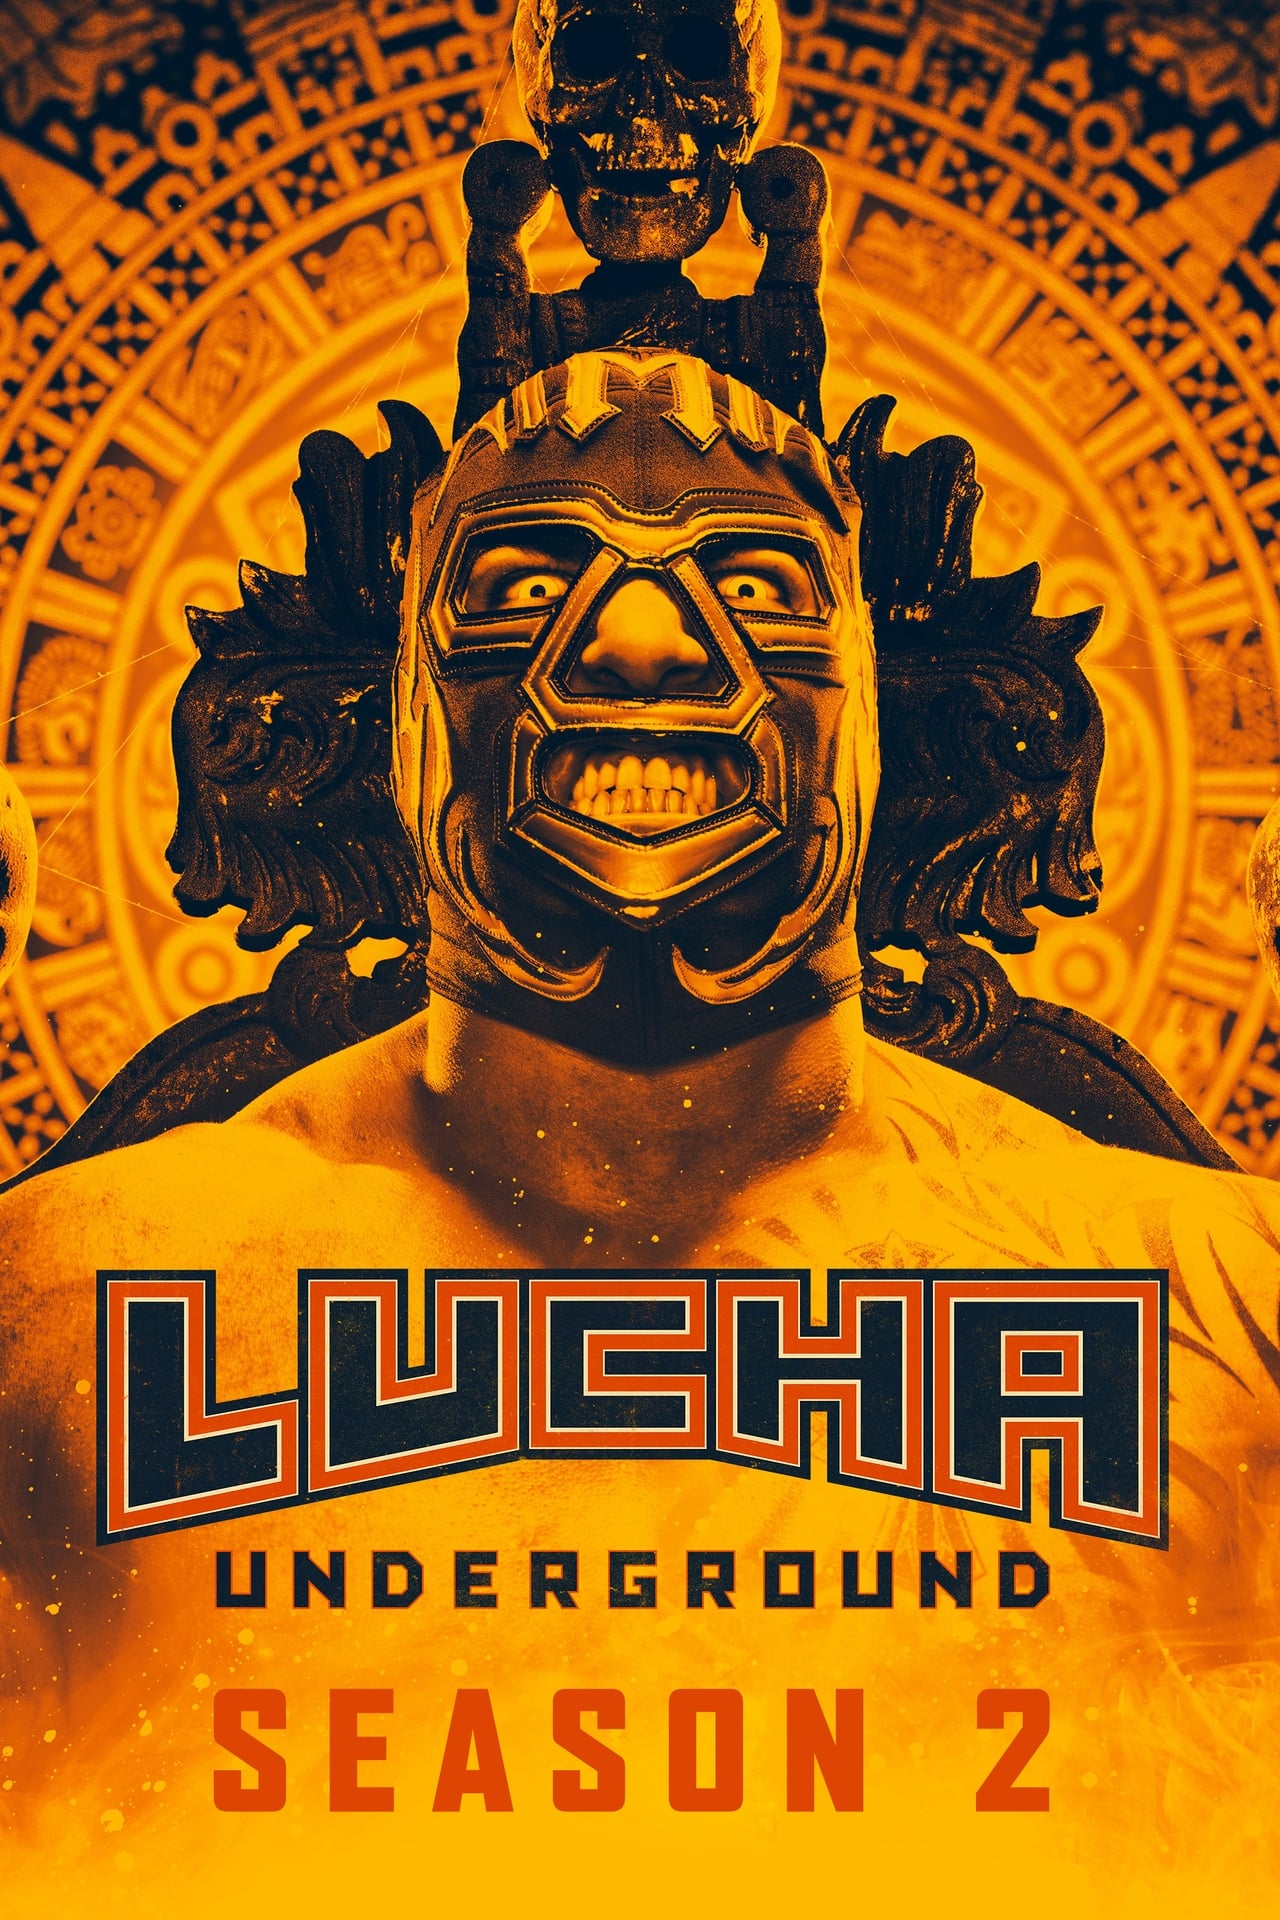 Lucha Underground Season 2